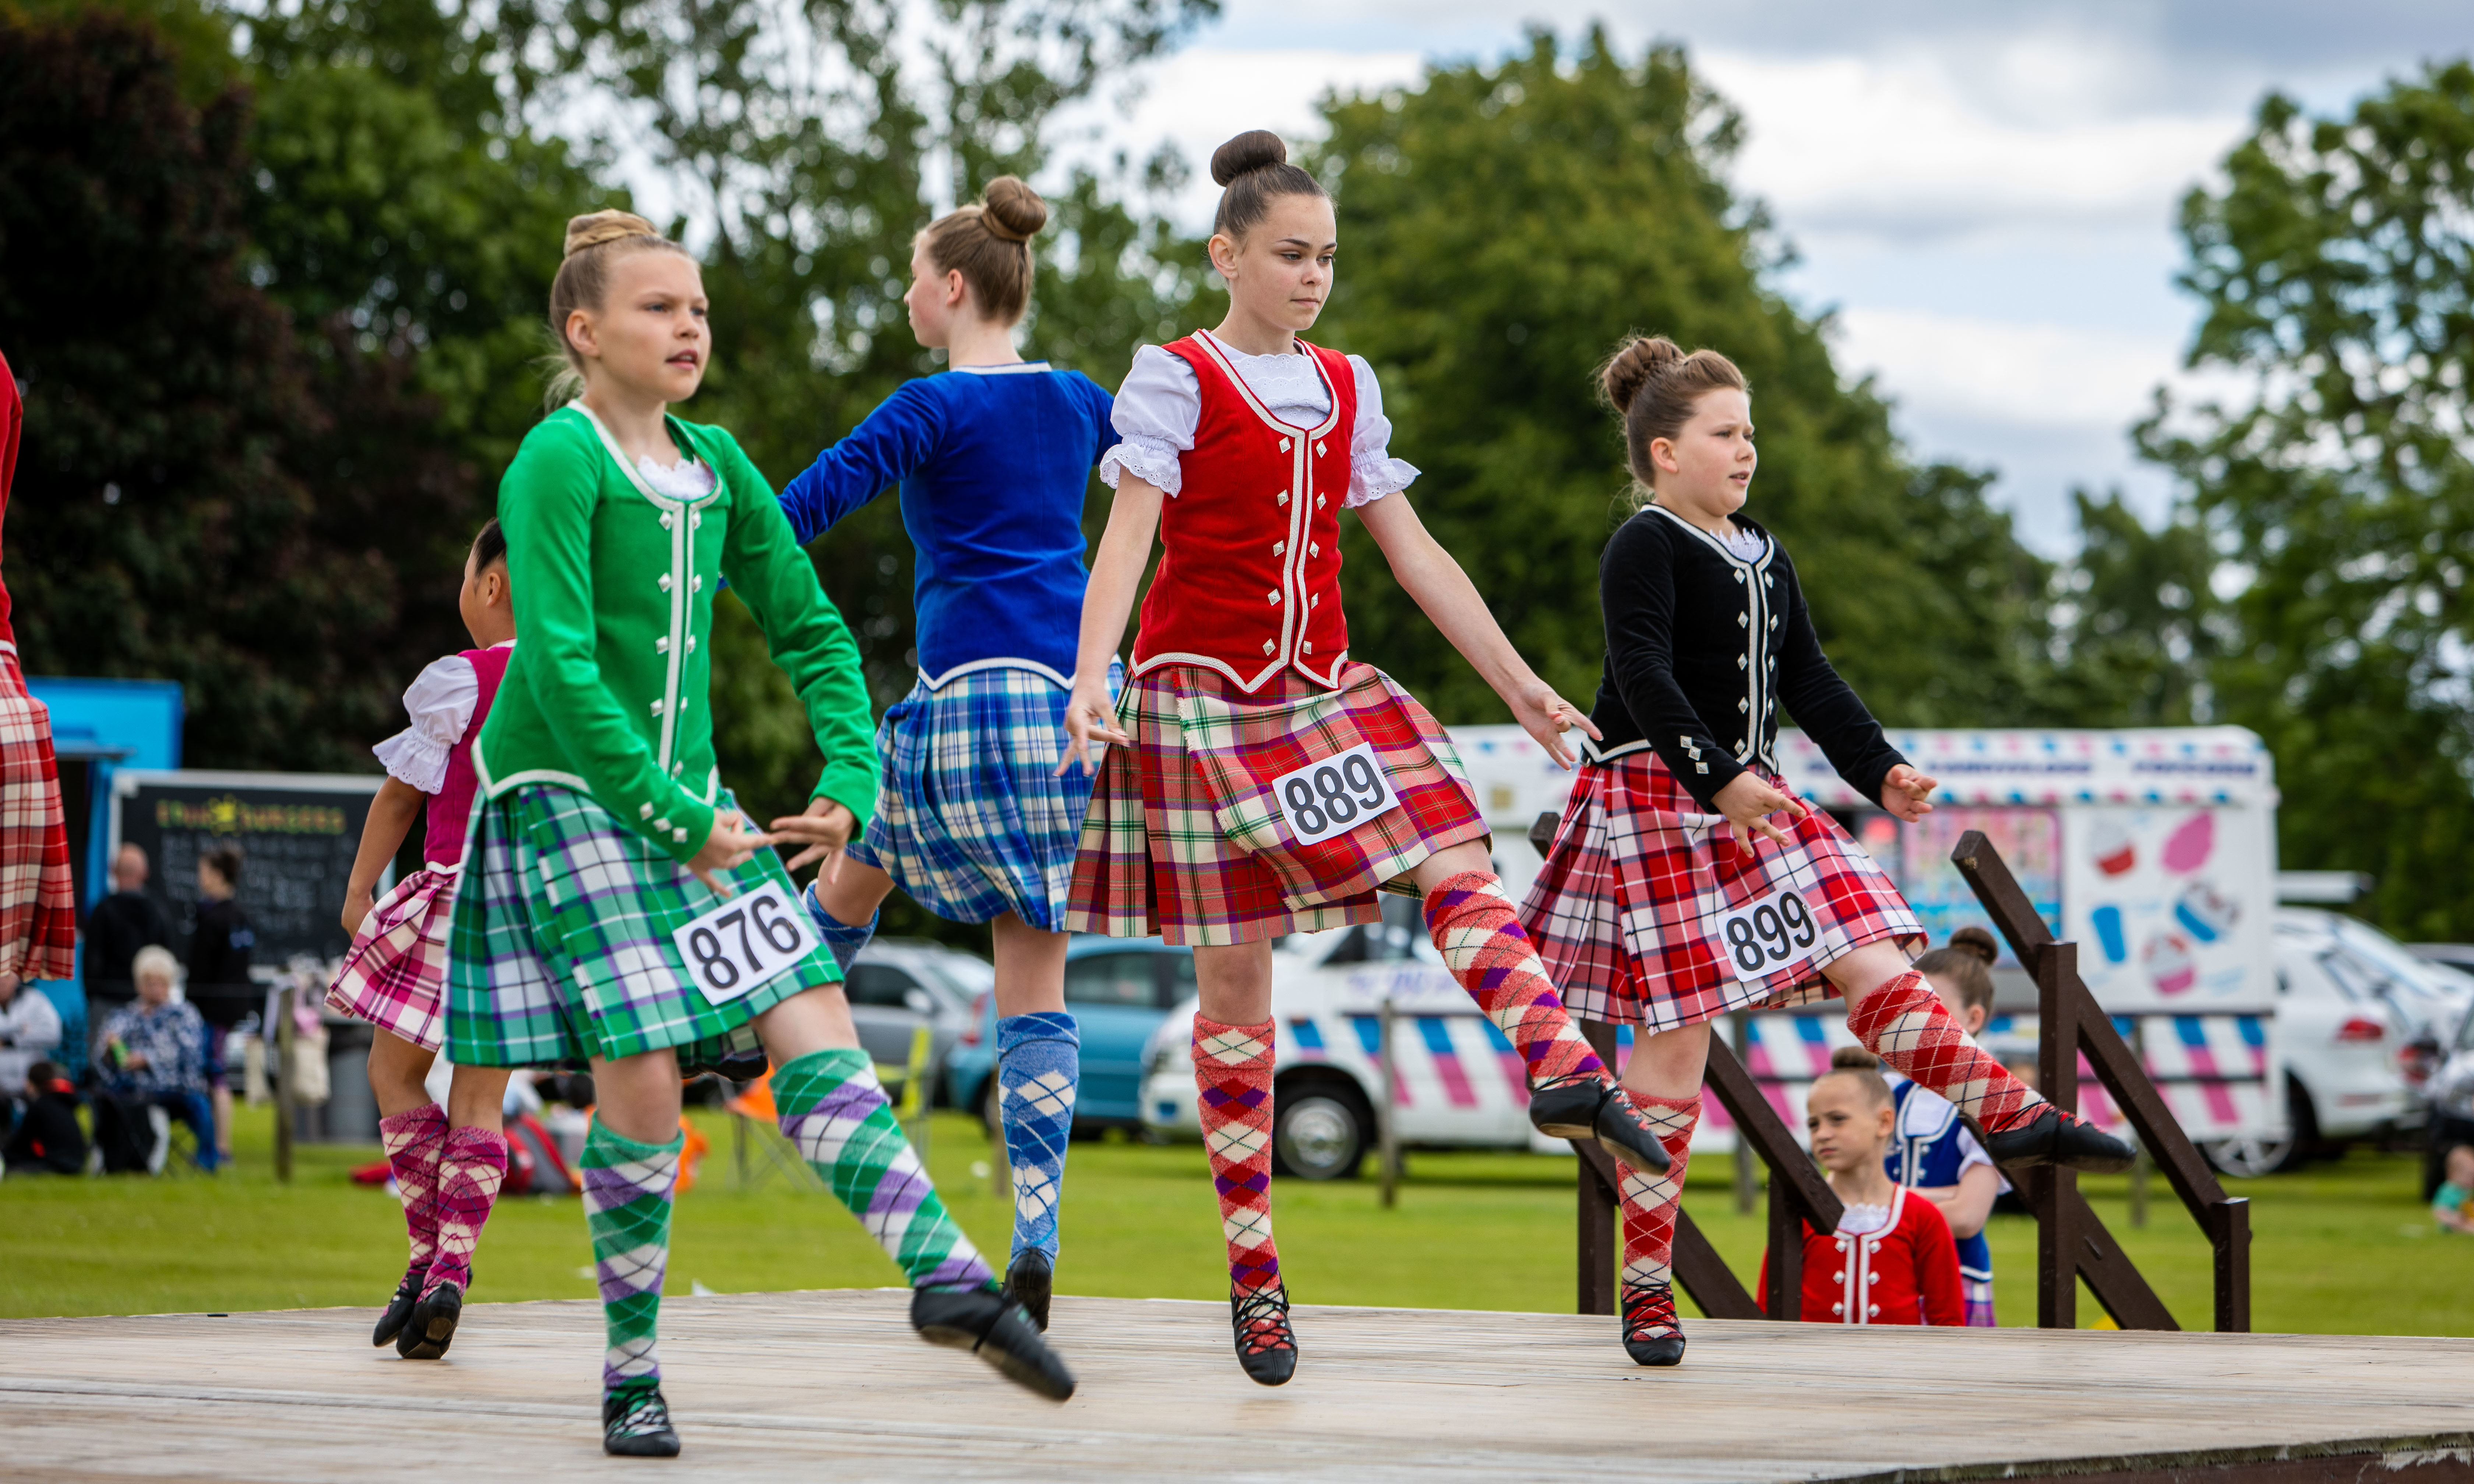 Highland dancers enjoyed the event